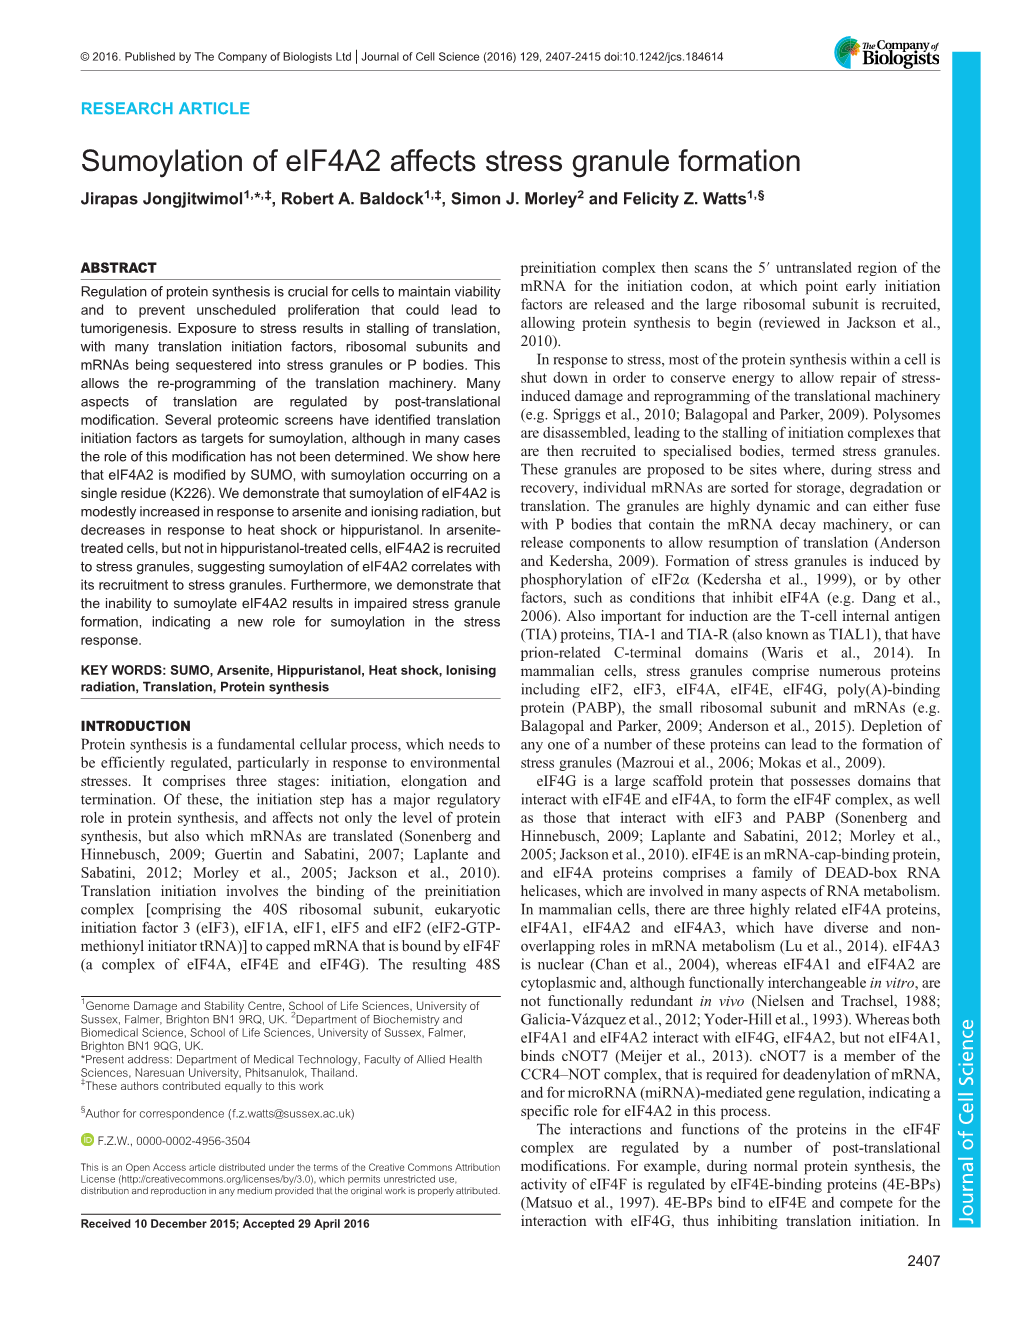 Sumoylation of Eif4a2 Affects Stress Granule Formation Jirapas Jongjitwimol1,*,‡, Robert A